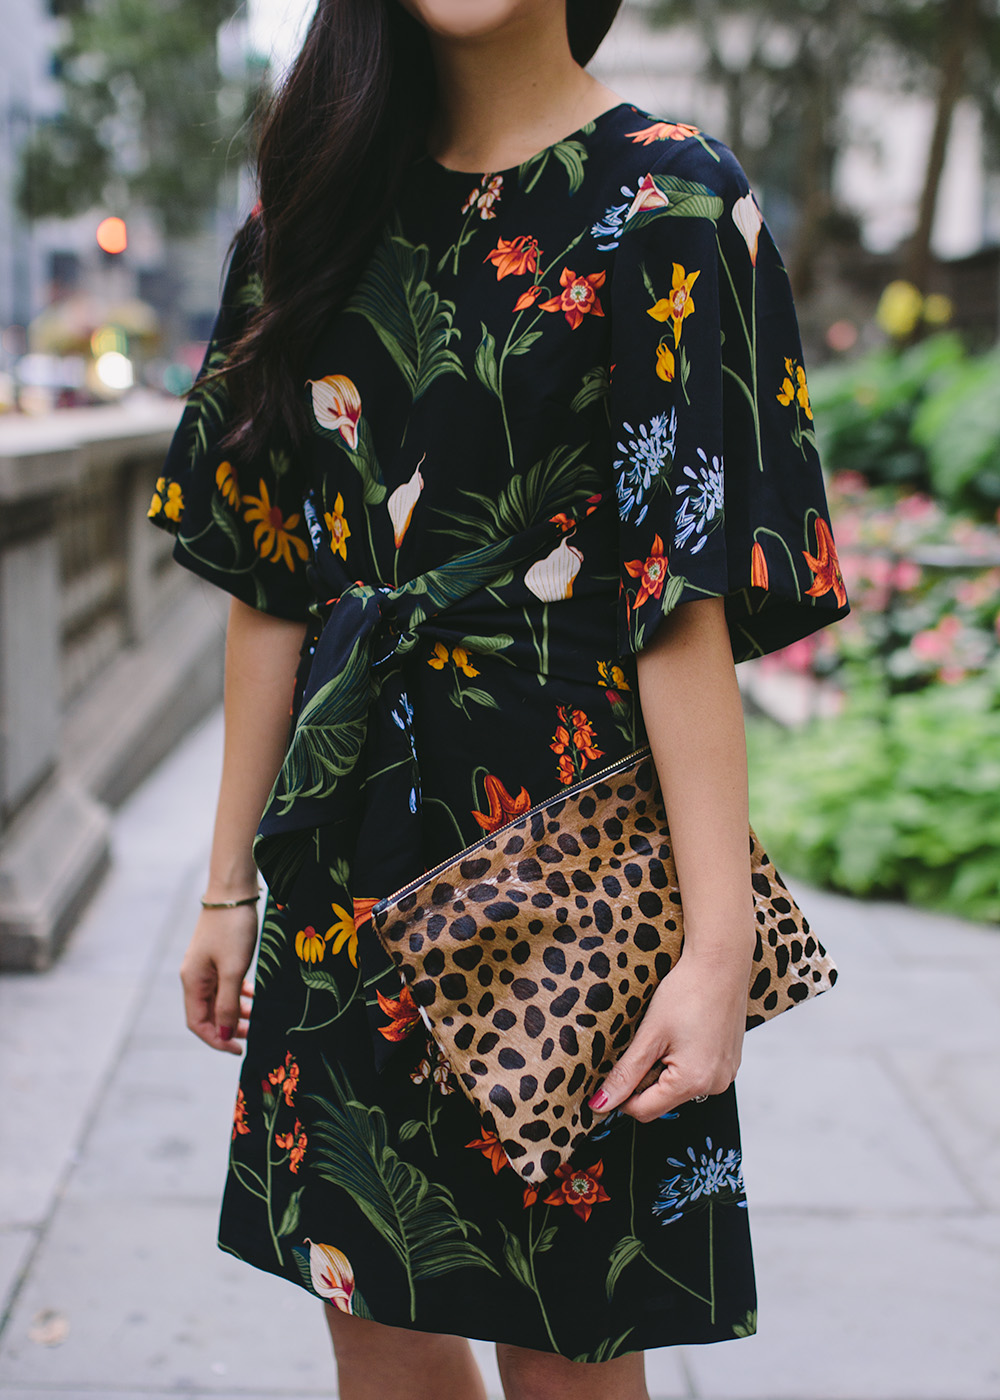 How to Mix Prints / Floral Dress & Leopard Bag